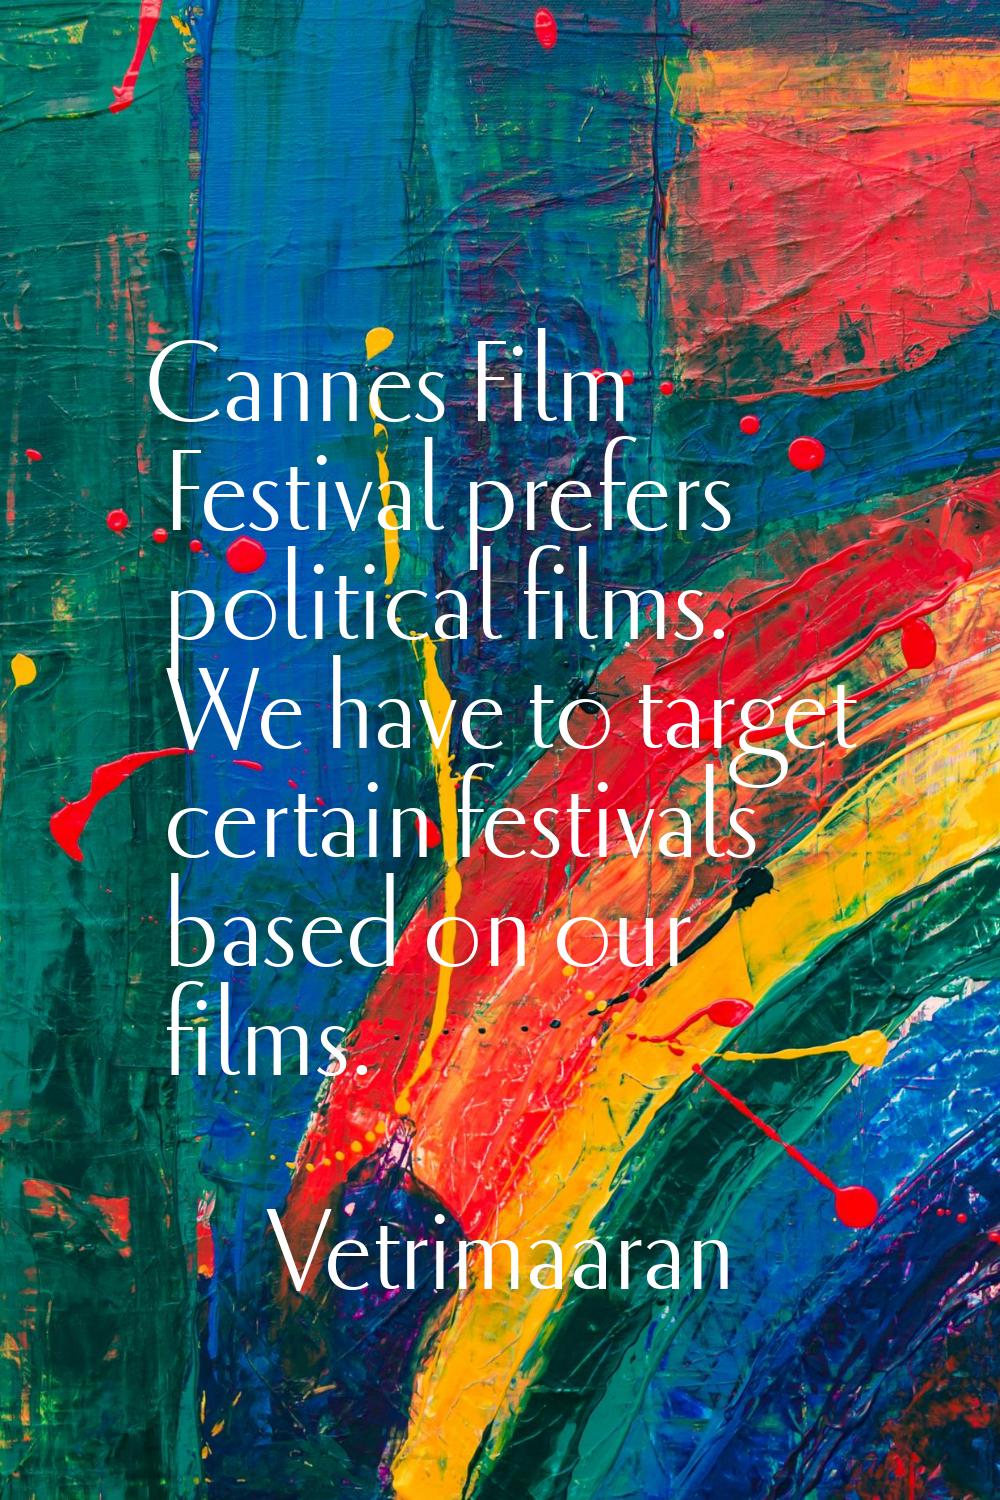 Cannes Film Festival prefers political films. We have to target certain festivals based on our film